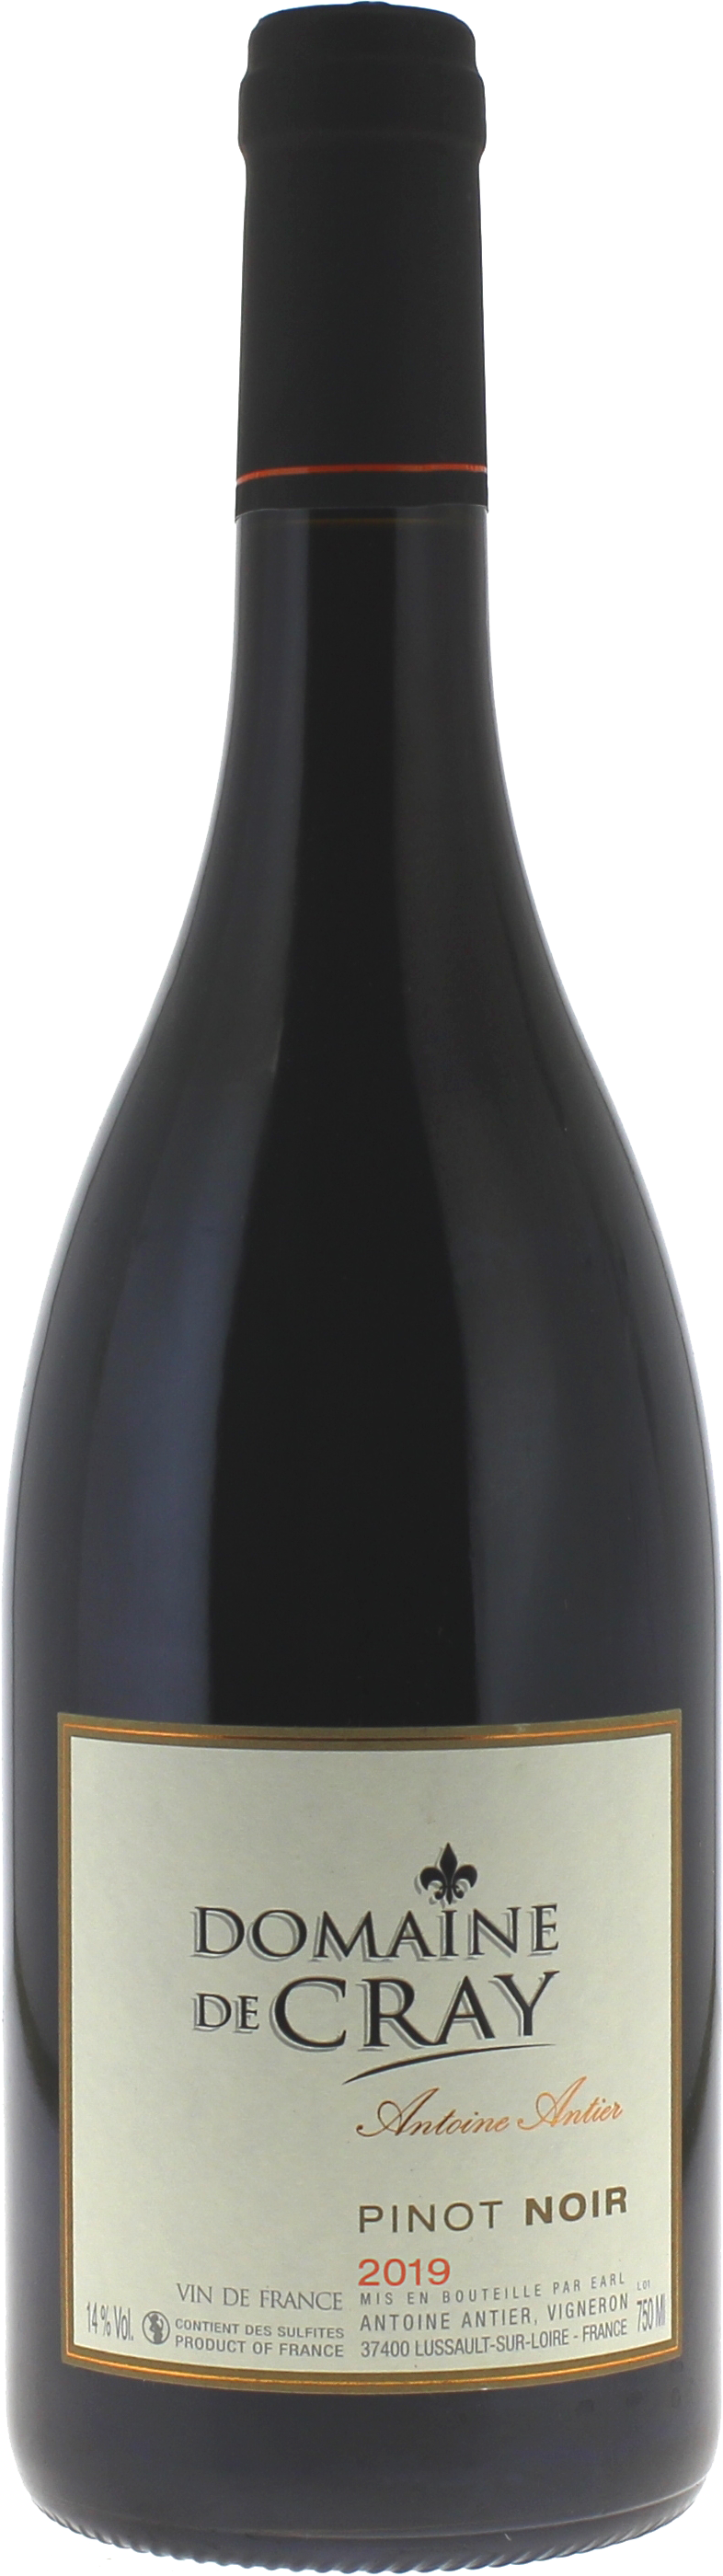 Pinot Noir Domaine de Cray 2019 6 per case